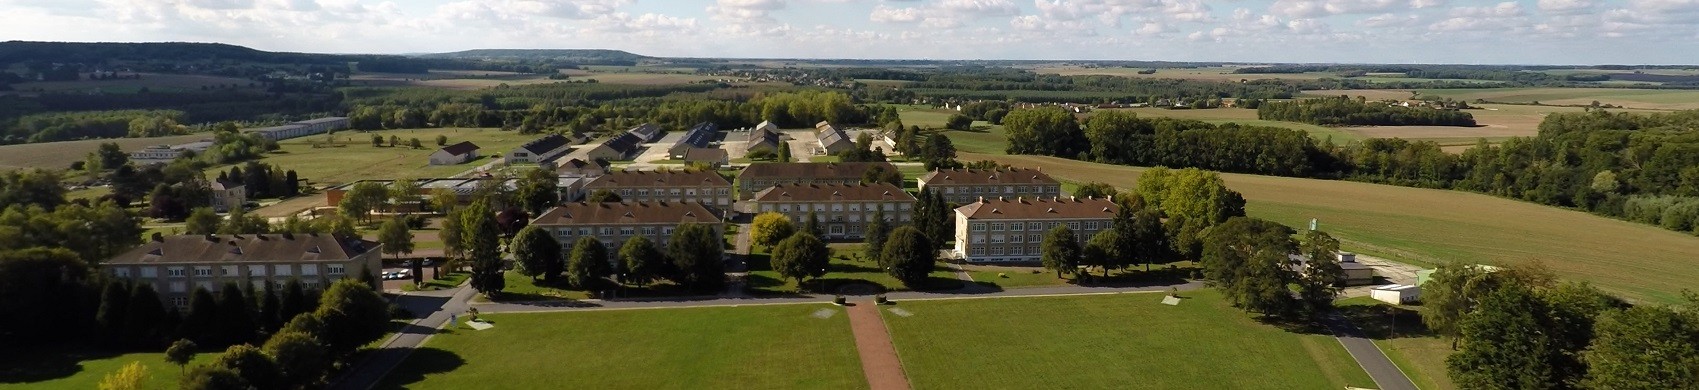 campus-inovia-drone-d-ecole